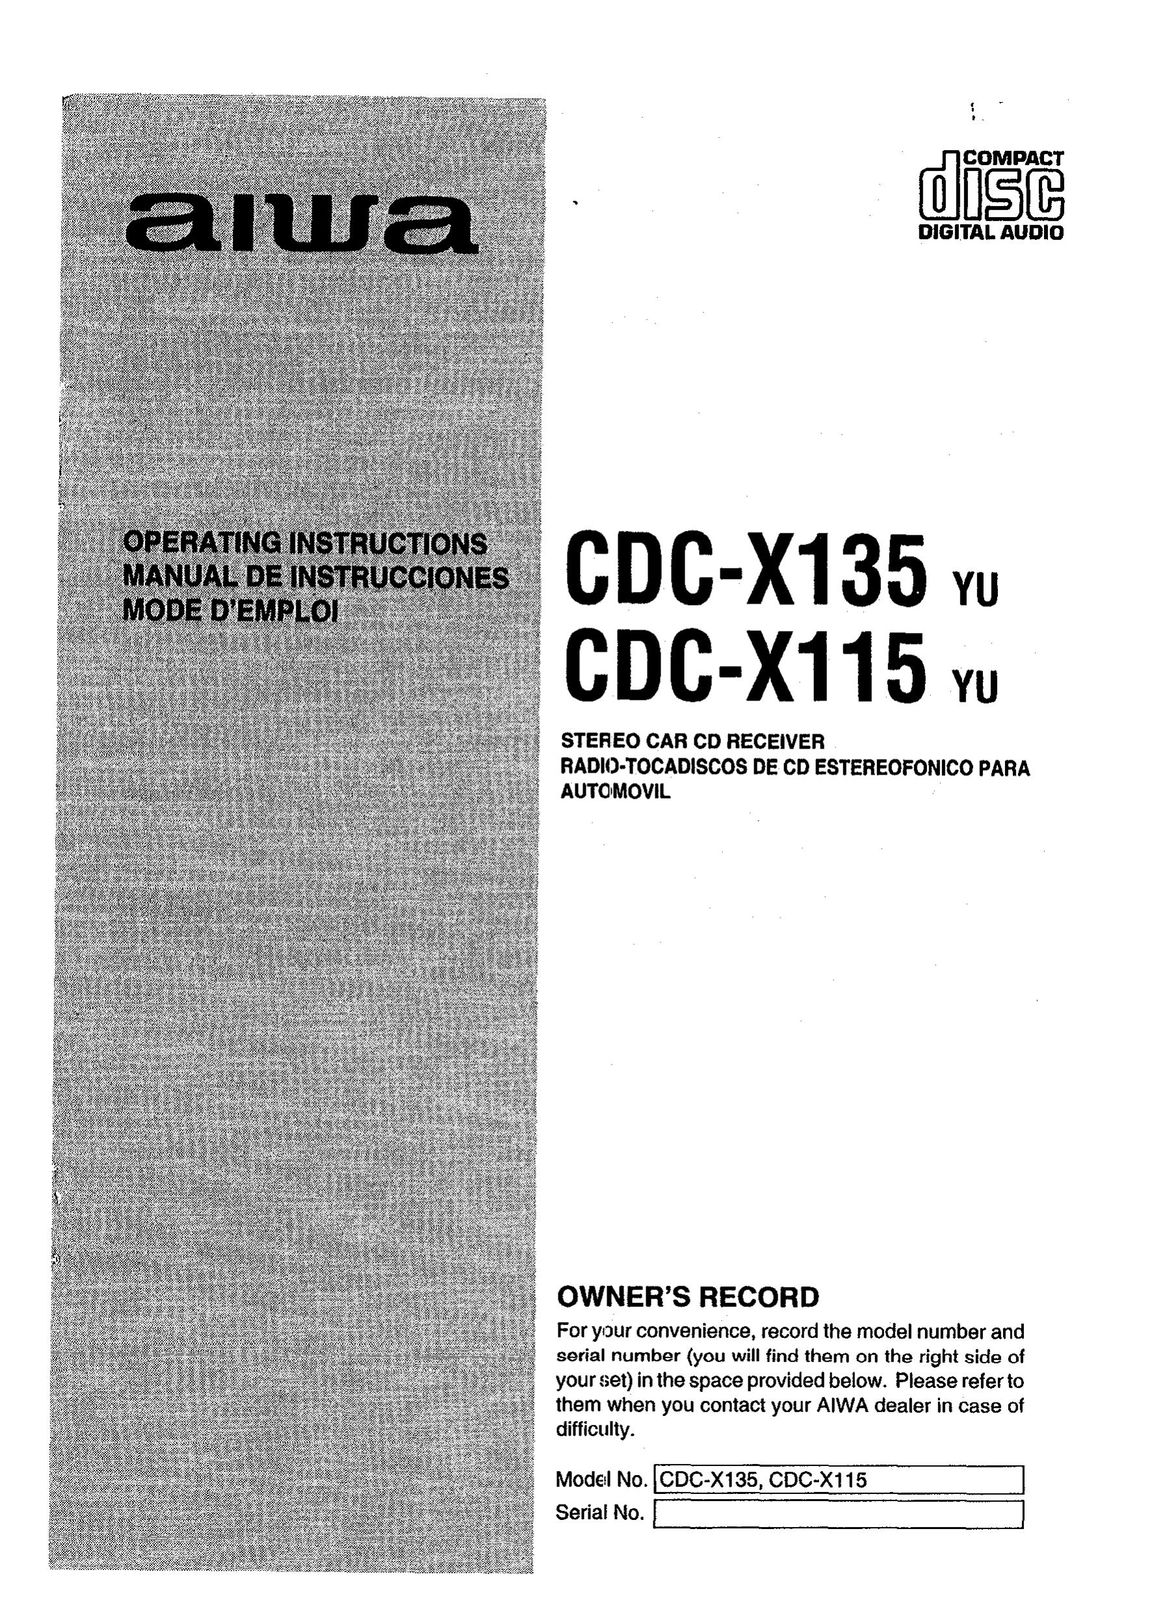 Aiwa CDC-XI15 Car Stereo System User Manual